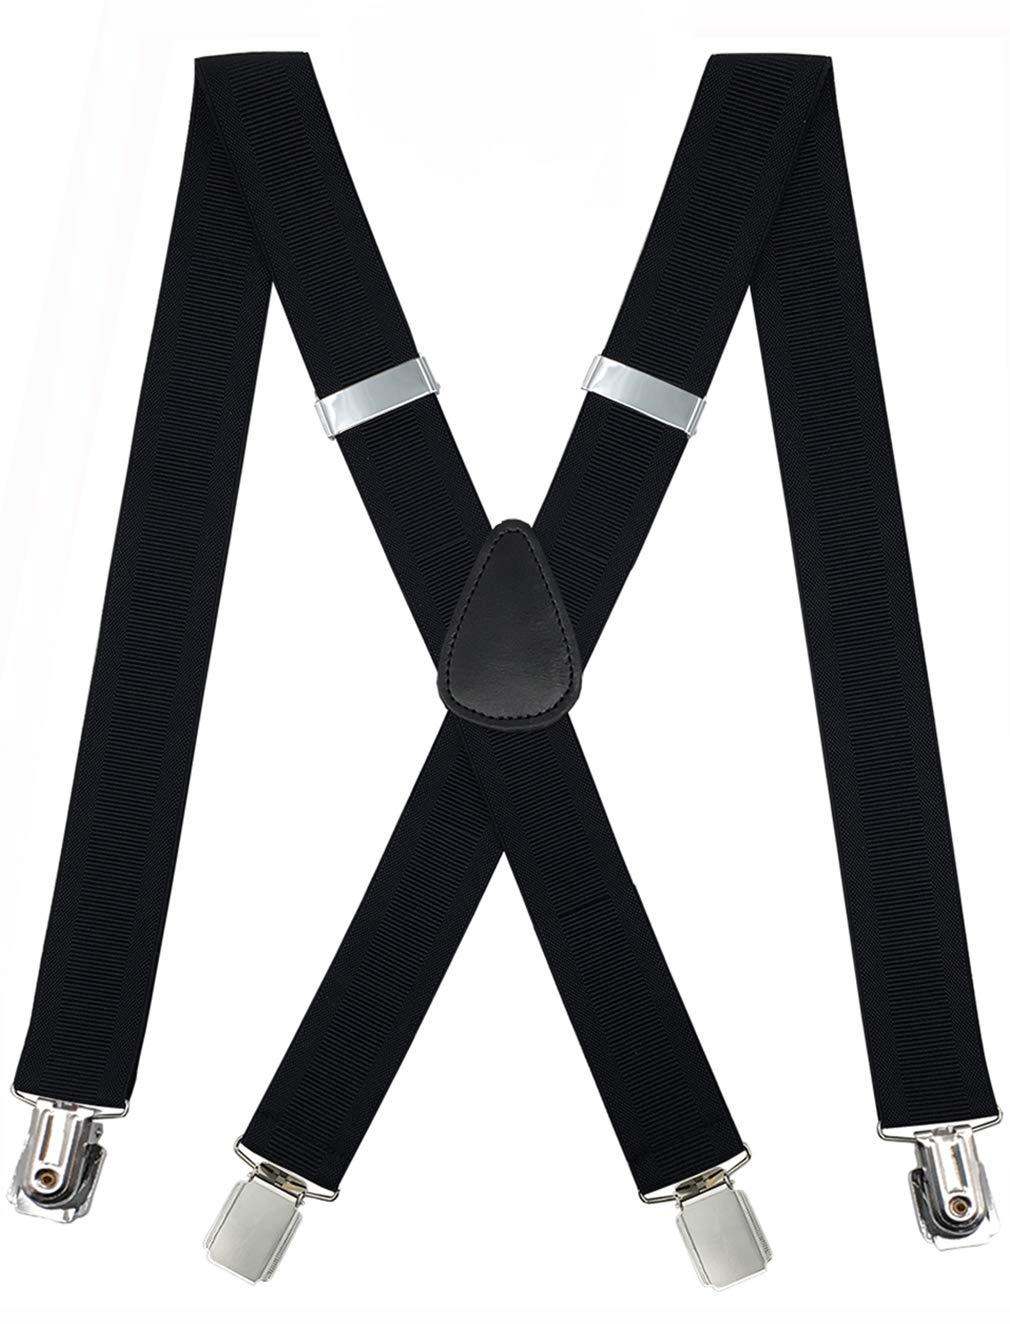 [Australia] - METUUTER Suspenders for Men – Heavy Duty Strong Clips Adjustable Elastic X Back Braces Big and Tall Men's Suspenders Black 